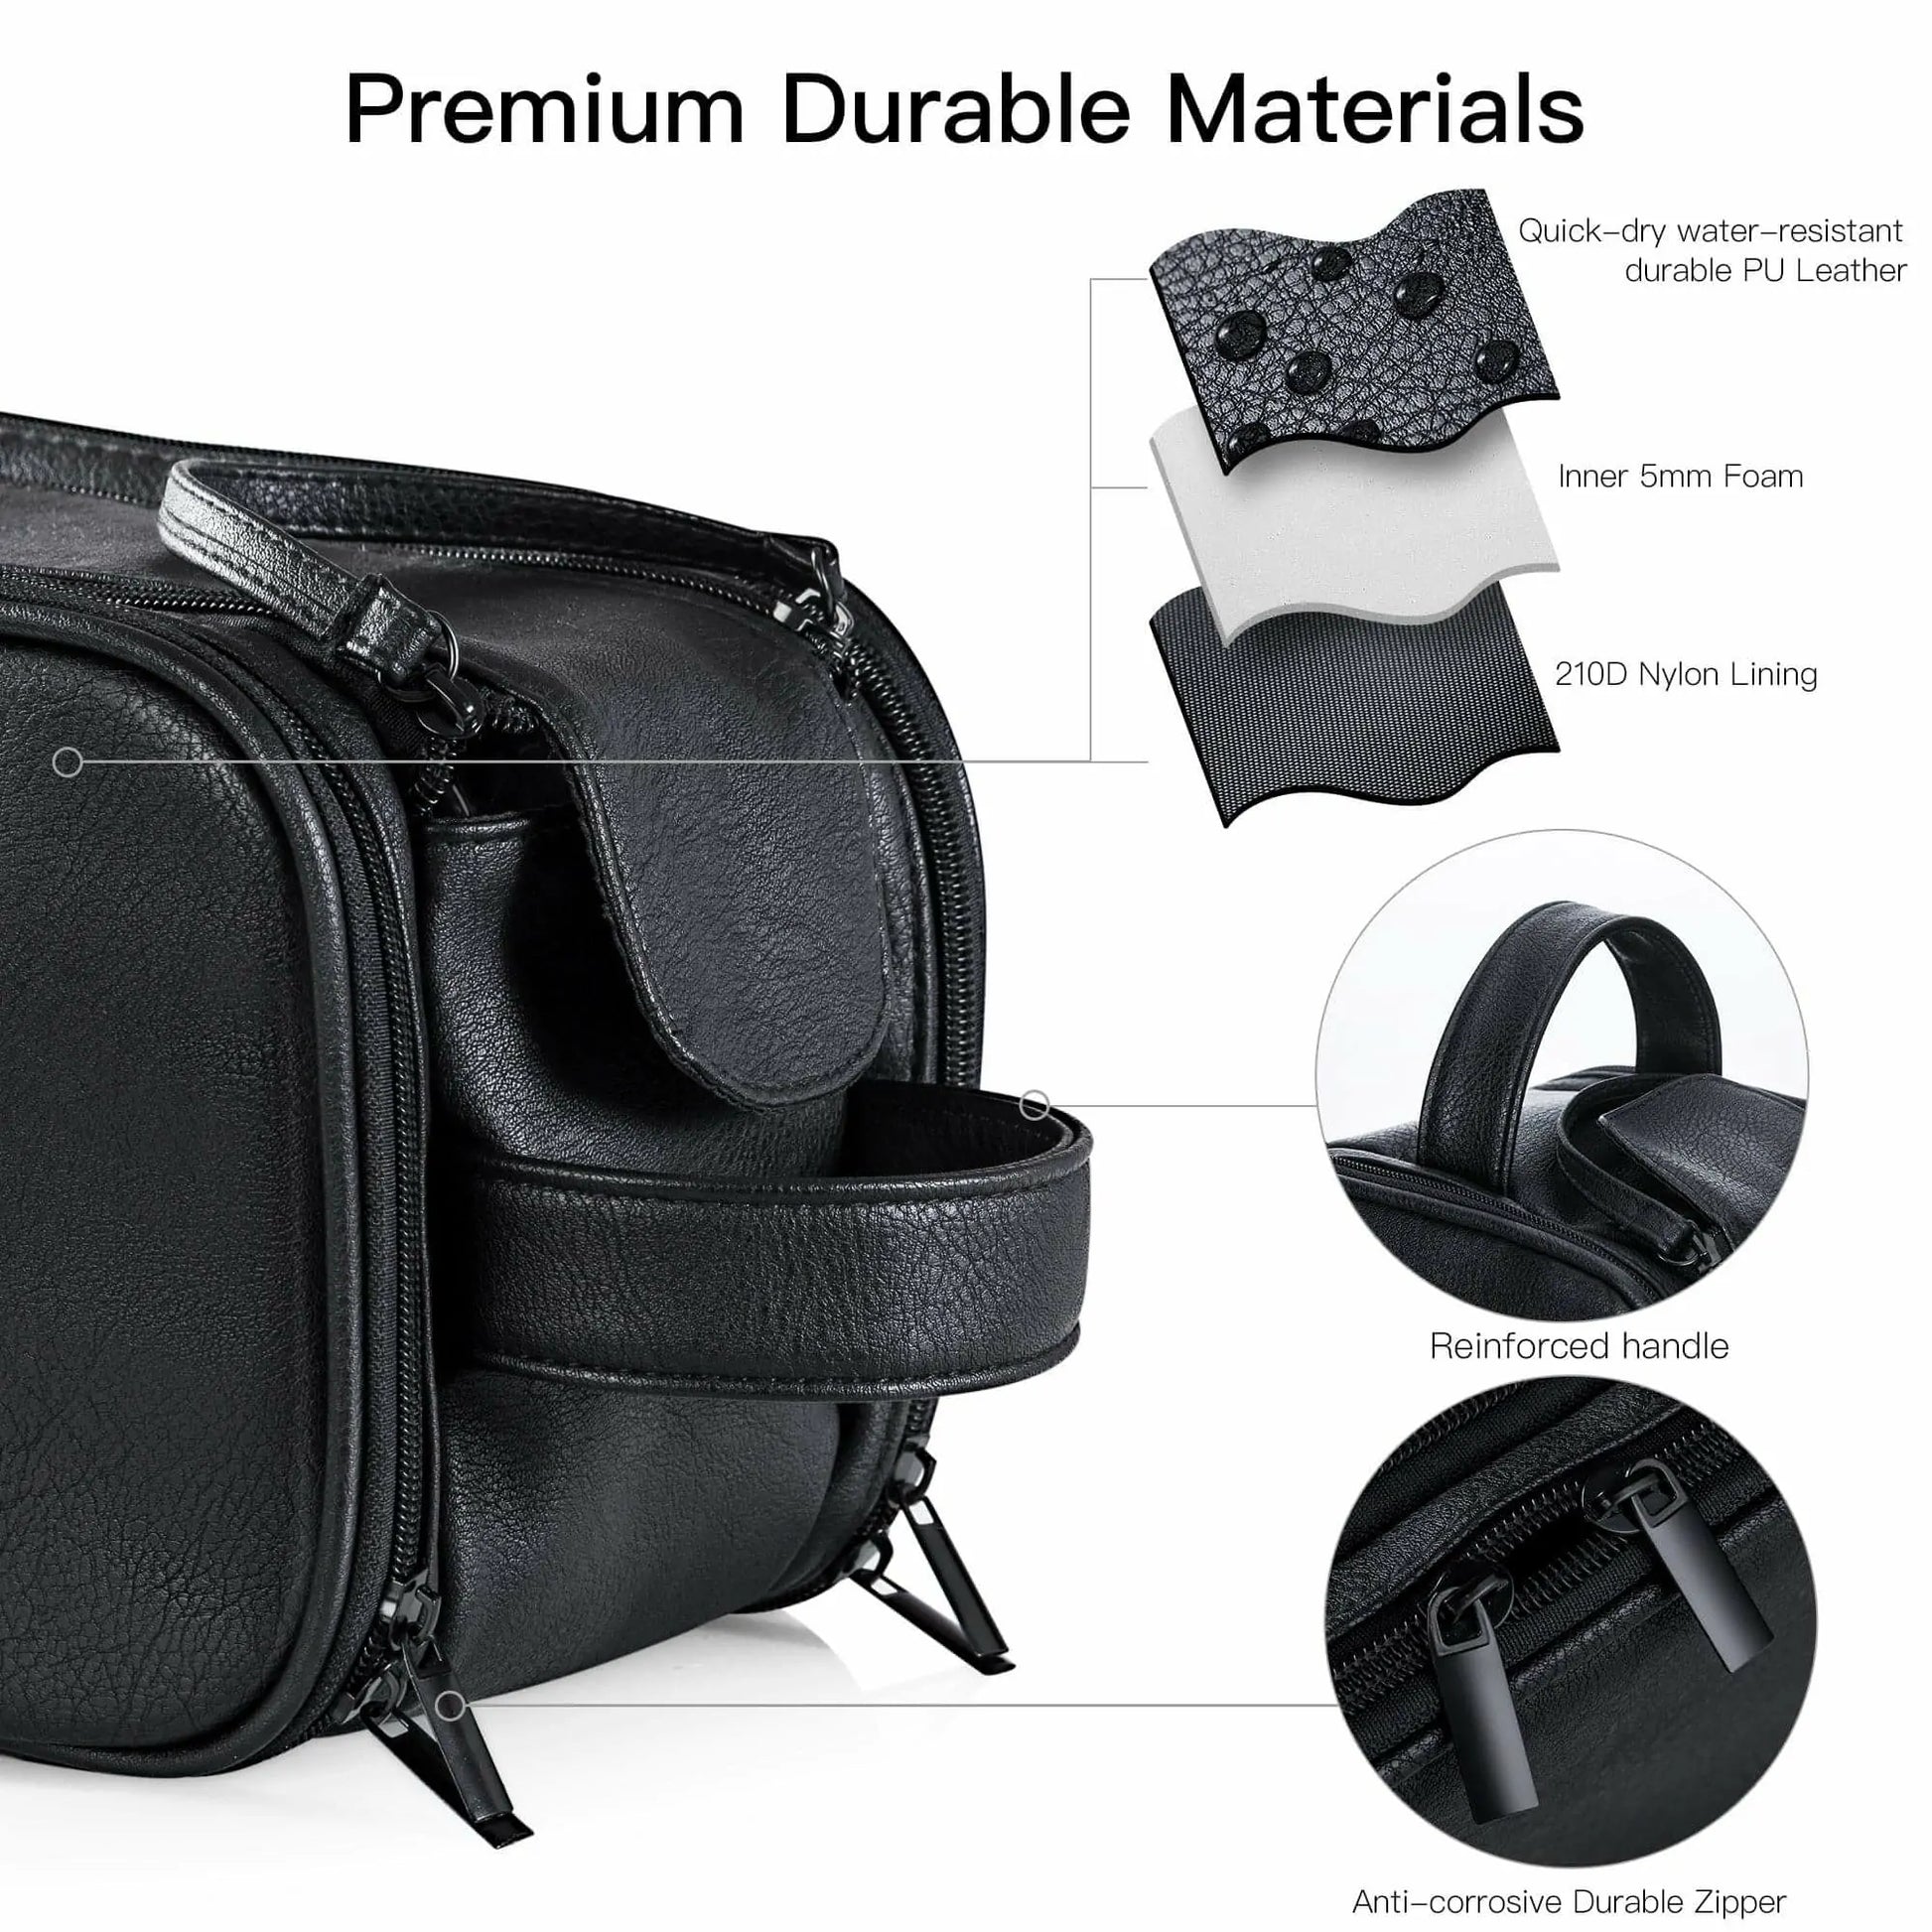 Elviros Toiletry Bag, Travel Dopp Kit Leather Makeup Organizer Brown / Small (9.4 x 5.9 x 6.3inch)